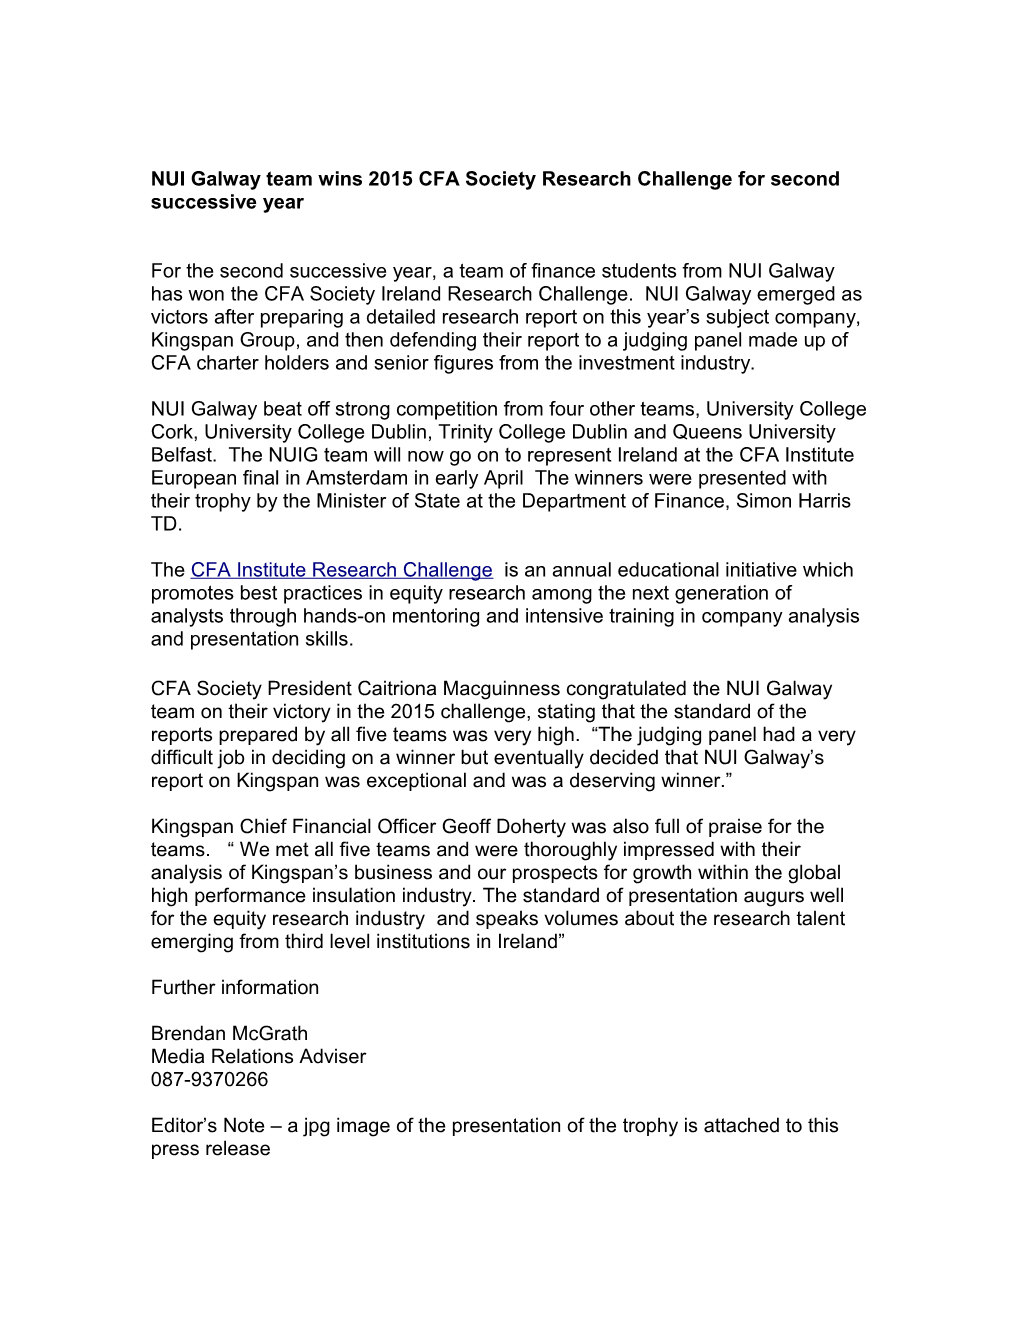 XXXX MMMM Winds 2015 CFA Society Research Challenge